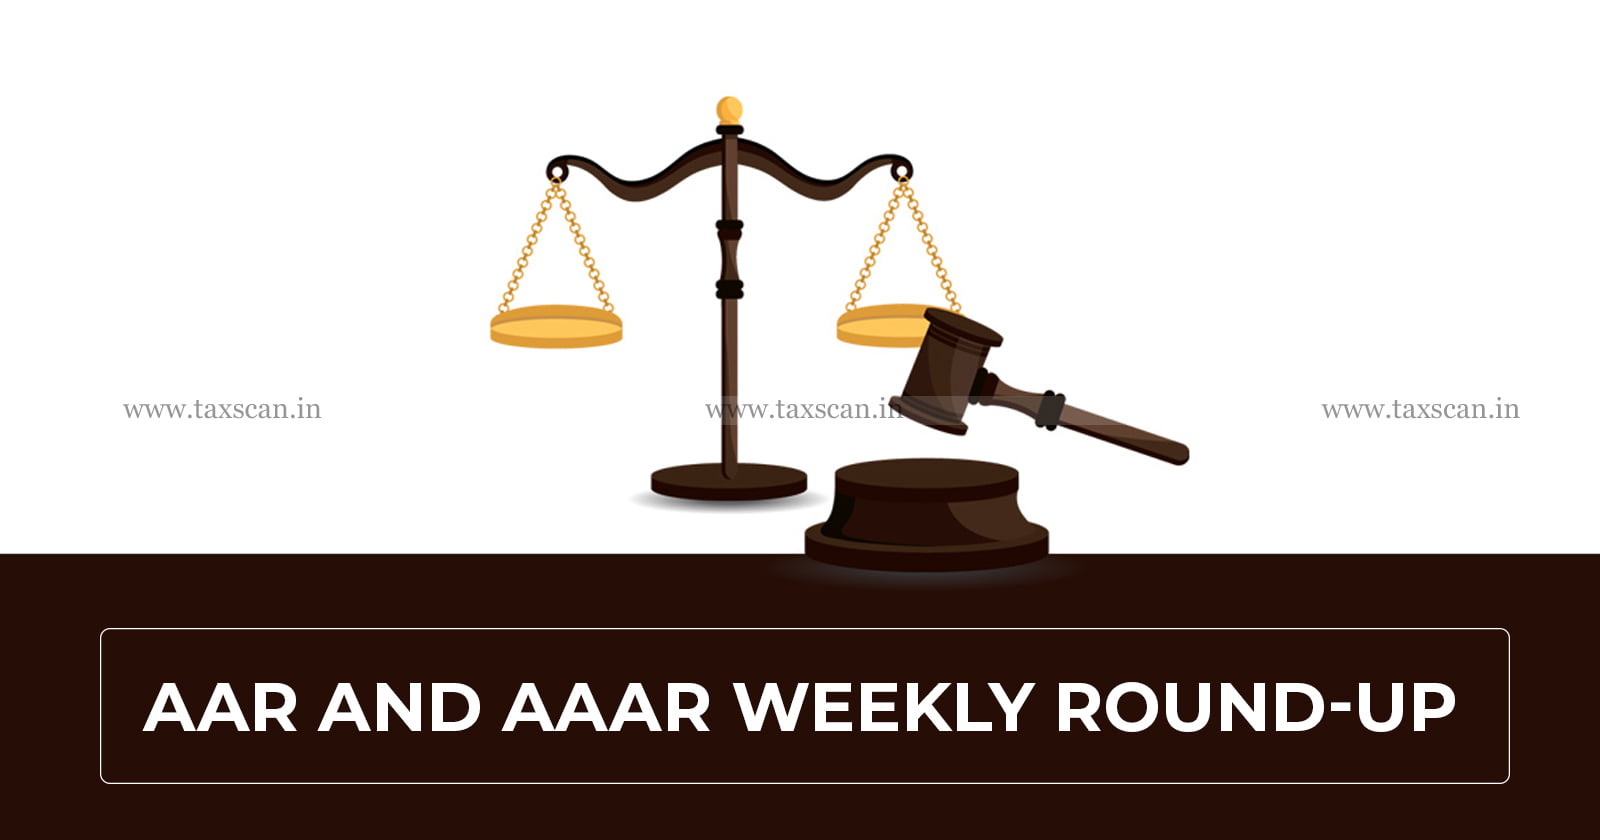 AAR - AAAR - Weekly Round Up - AAR and AAAR Weekly Round Up - taxscan